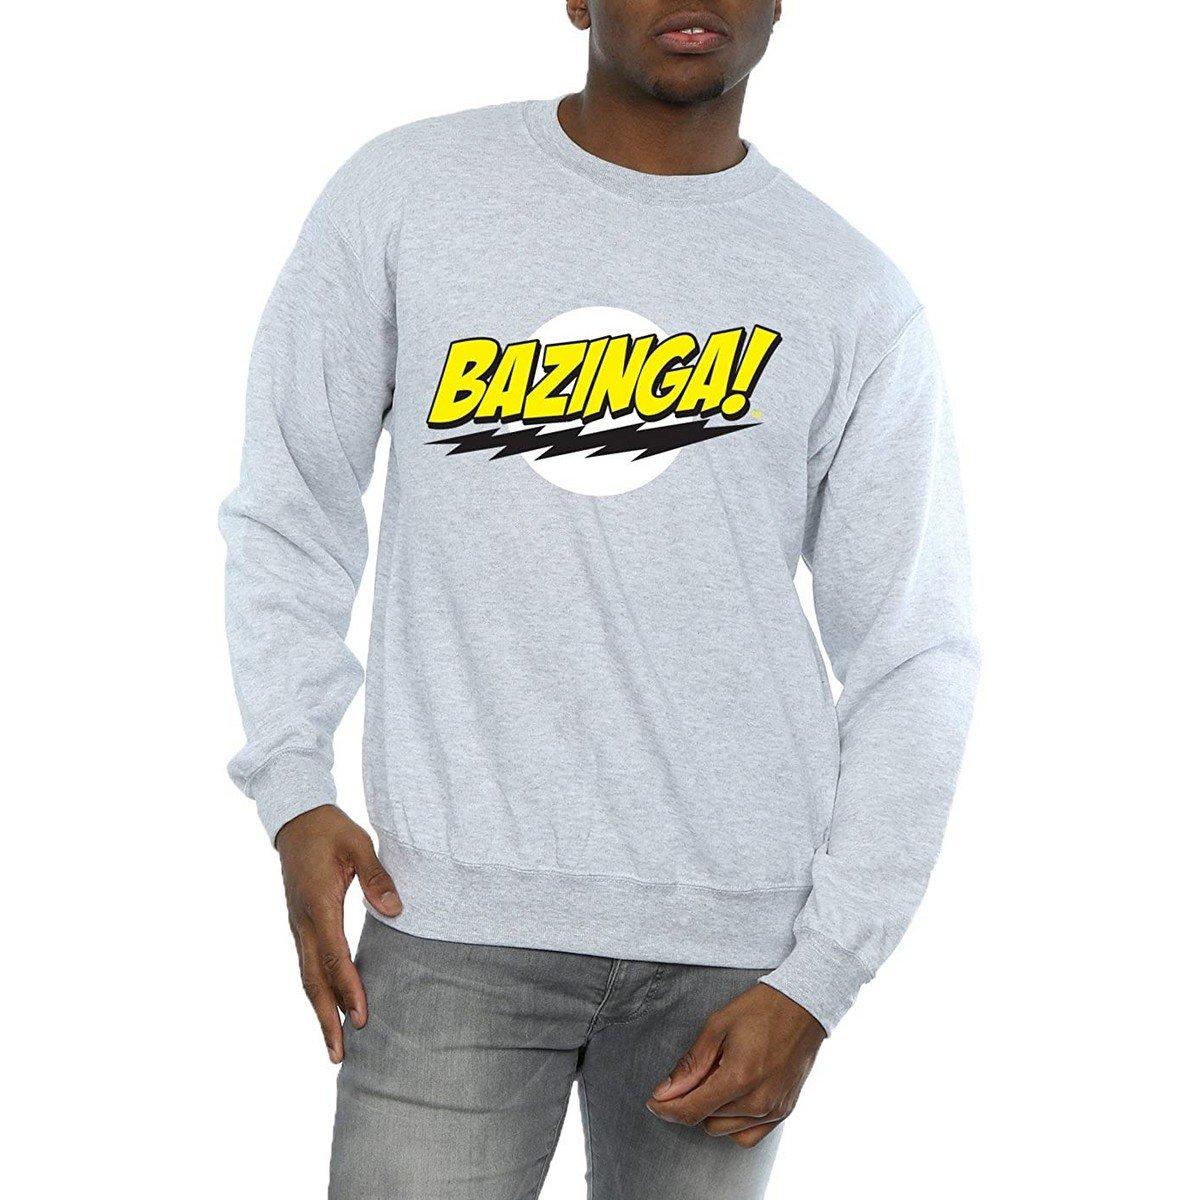 Bazinga Sweatshirt Herren Grau L von The Big Bang Theory